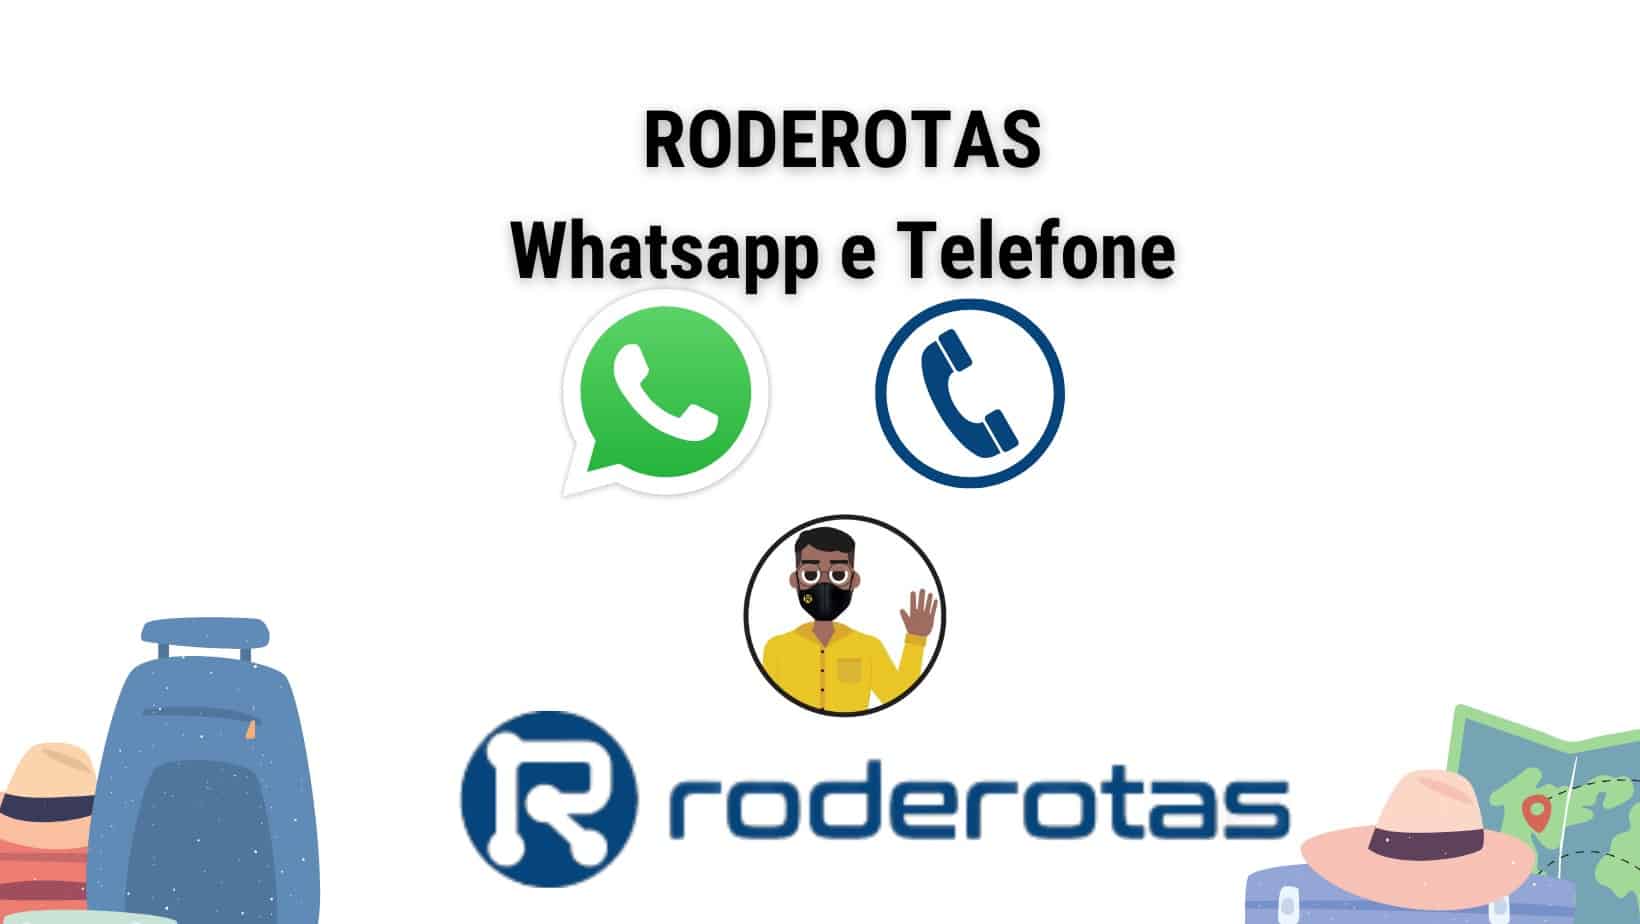 RODEROTAS WhatsApp é o número +55 62 8124